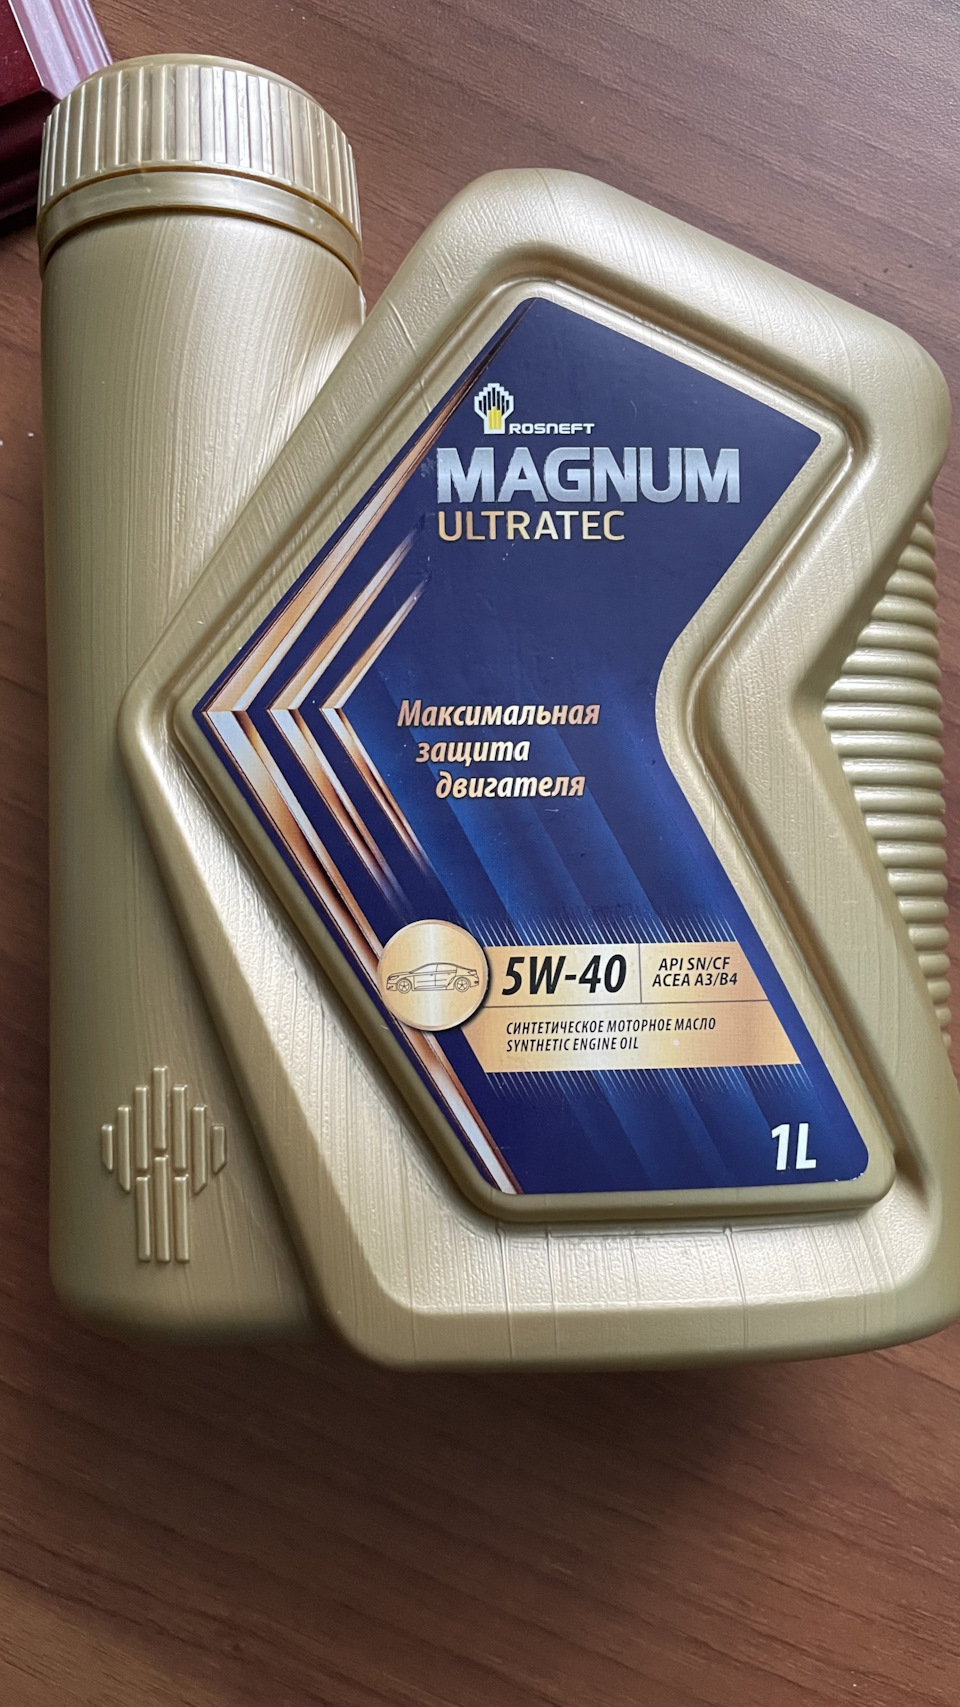 Моторное масло роснефть магнум ультратек 5w40. Rosneft Magnum Ultratec 5w40 реклама. Rosneft Magnum Ultratec. Упаковка моторного масла Magnum Ultratec. Справка от производитель моторного масла Magnum Ultratec.